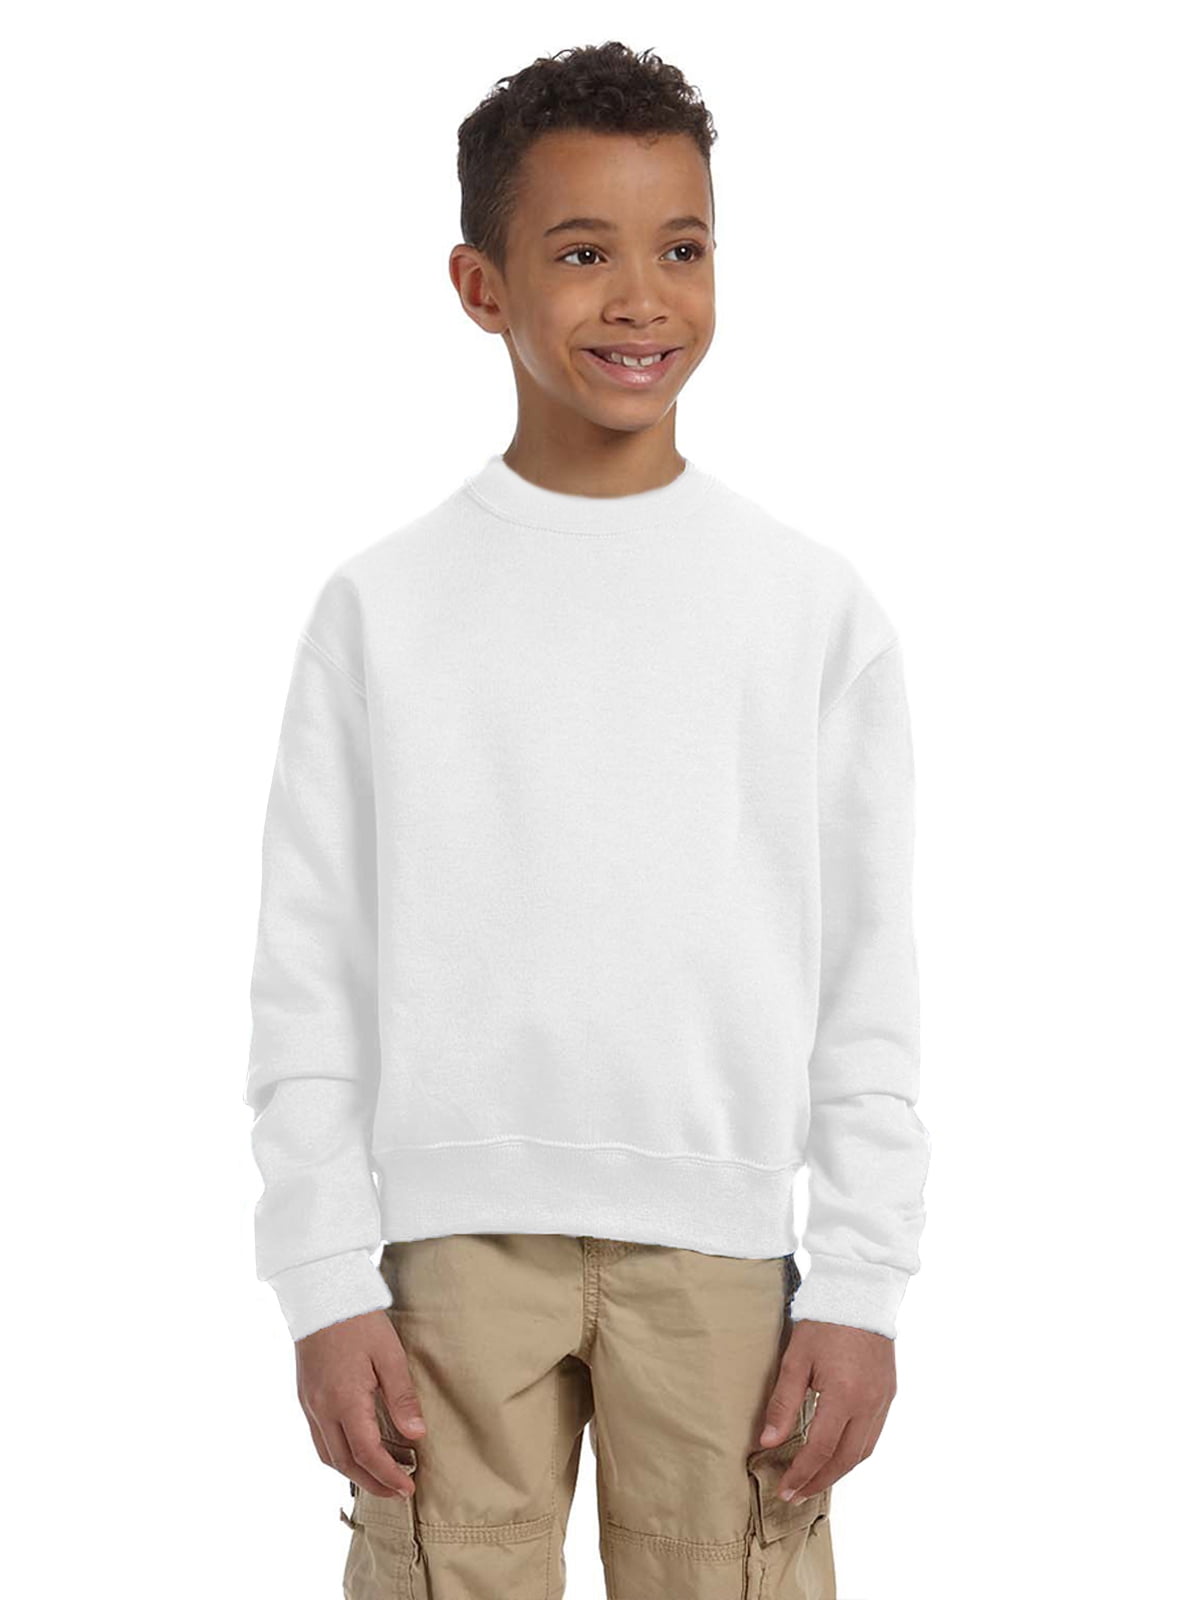 Youth Sweatshirts for Girls Teen Fashion Sweatshirt for Boys Plain ...